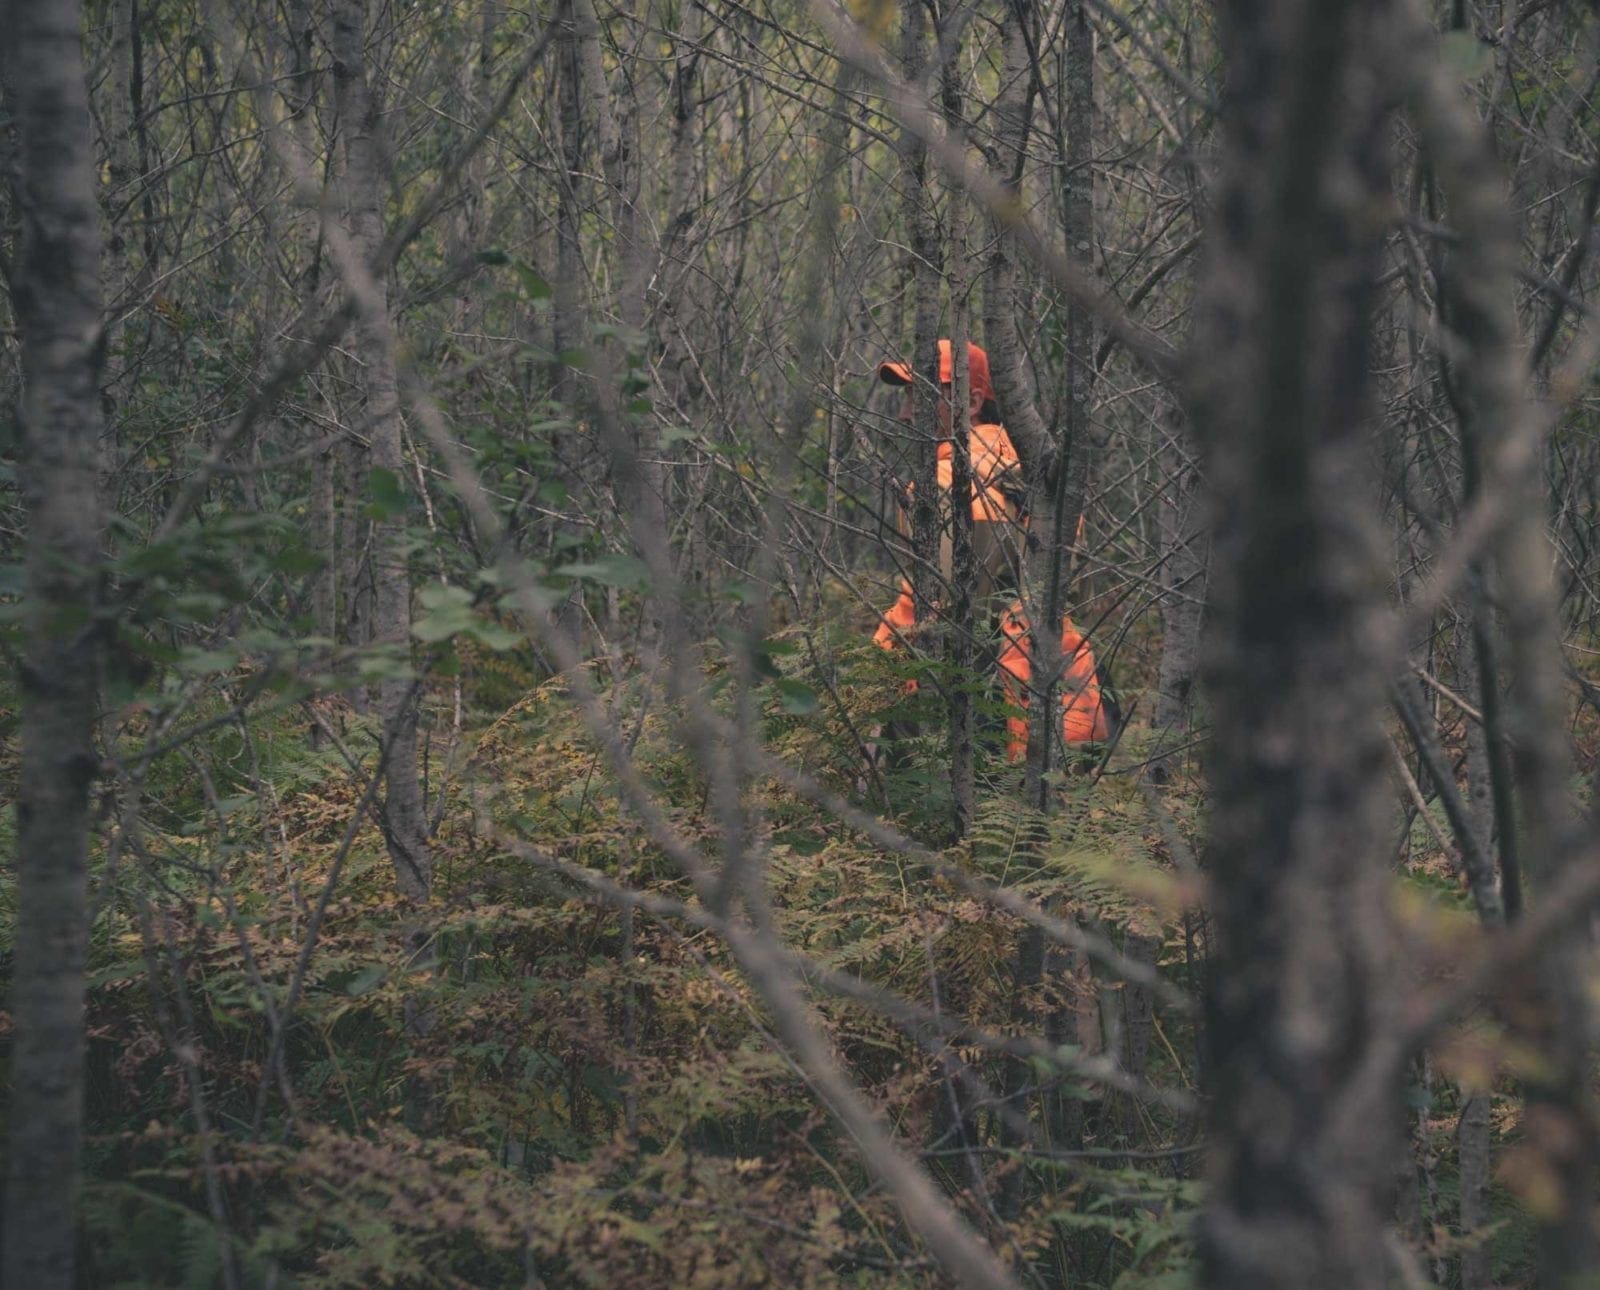 A ruffed grouse hunter walks through thick ruffed grouse habitat